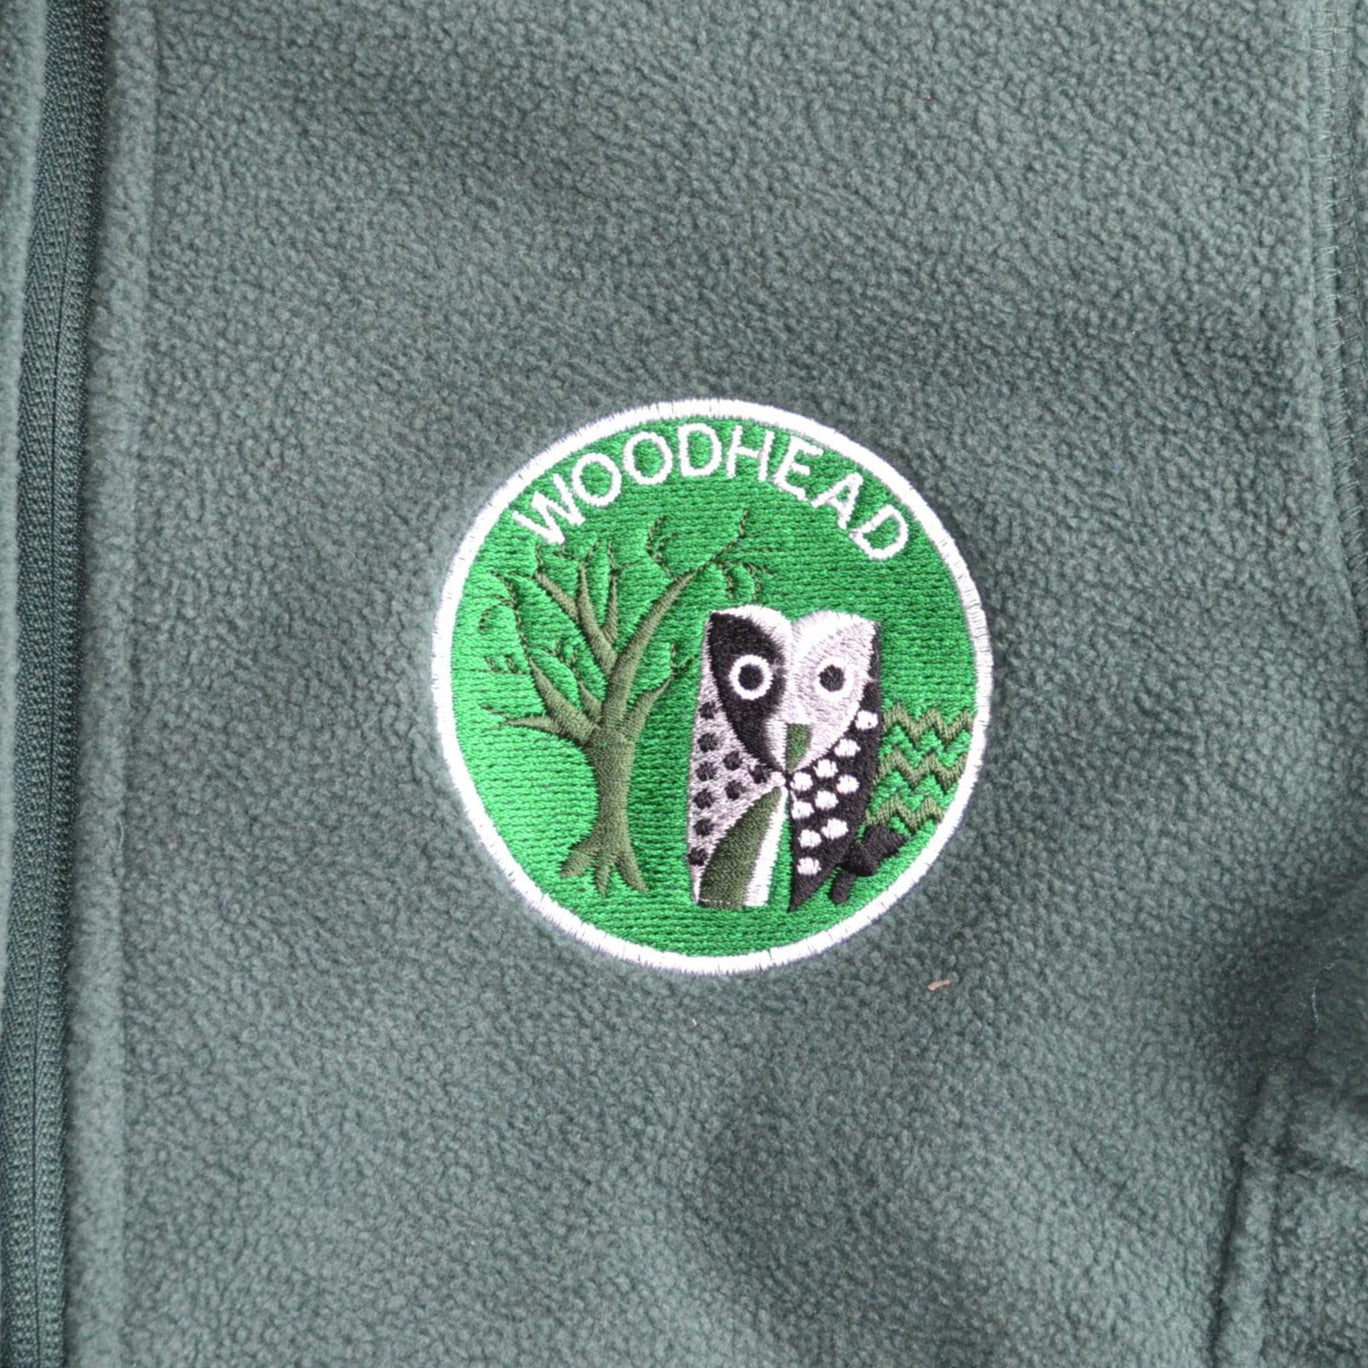 Woodhead Primary - Green Fleece - Age 5